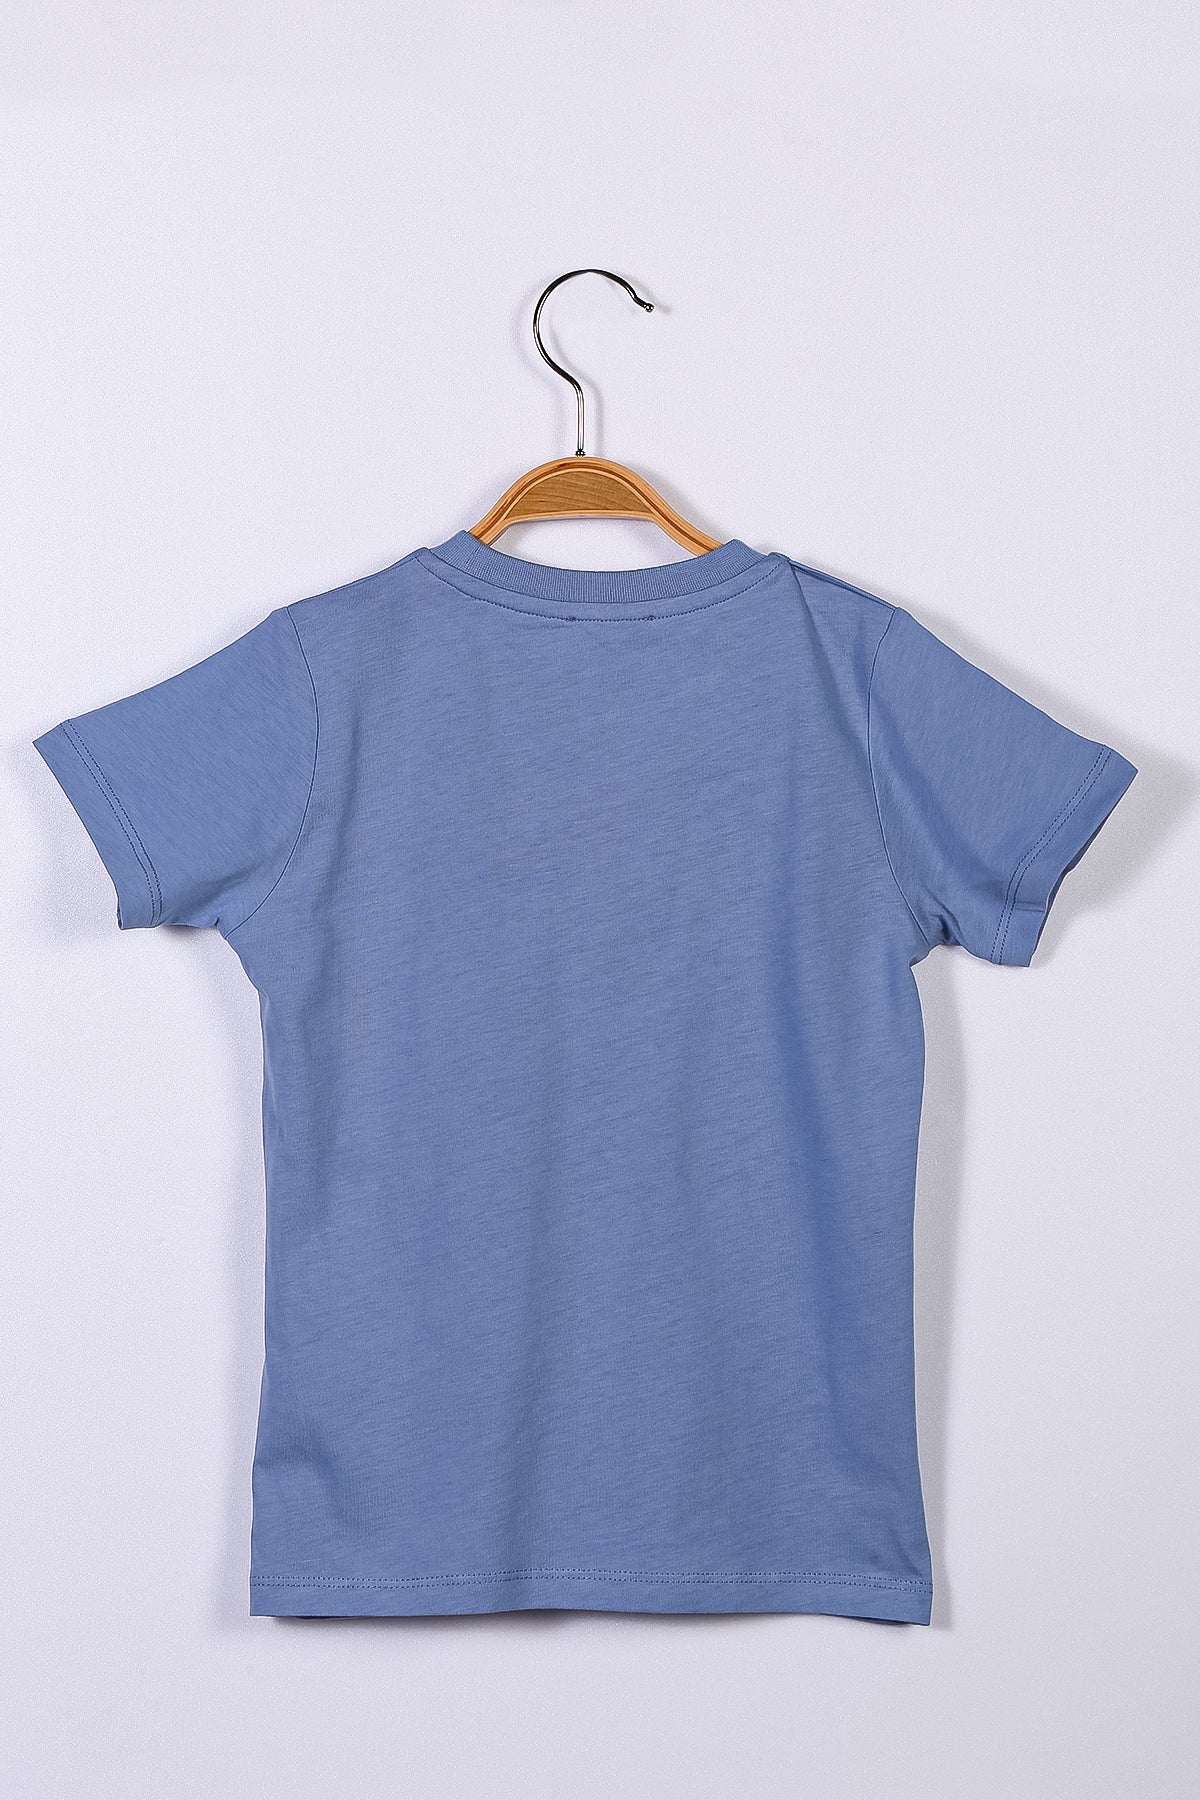 Mavi Unisex Çocuk Basic T-Shirt (4-12yaş)-1